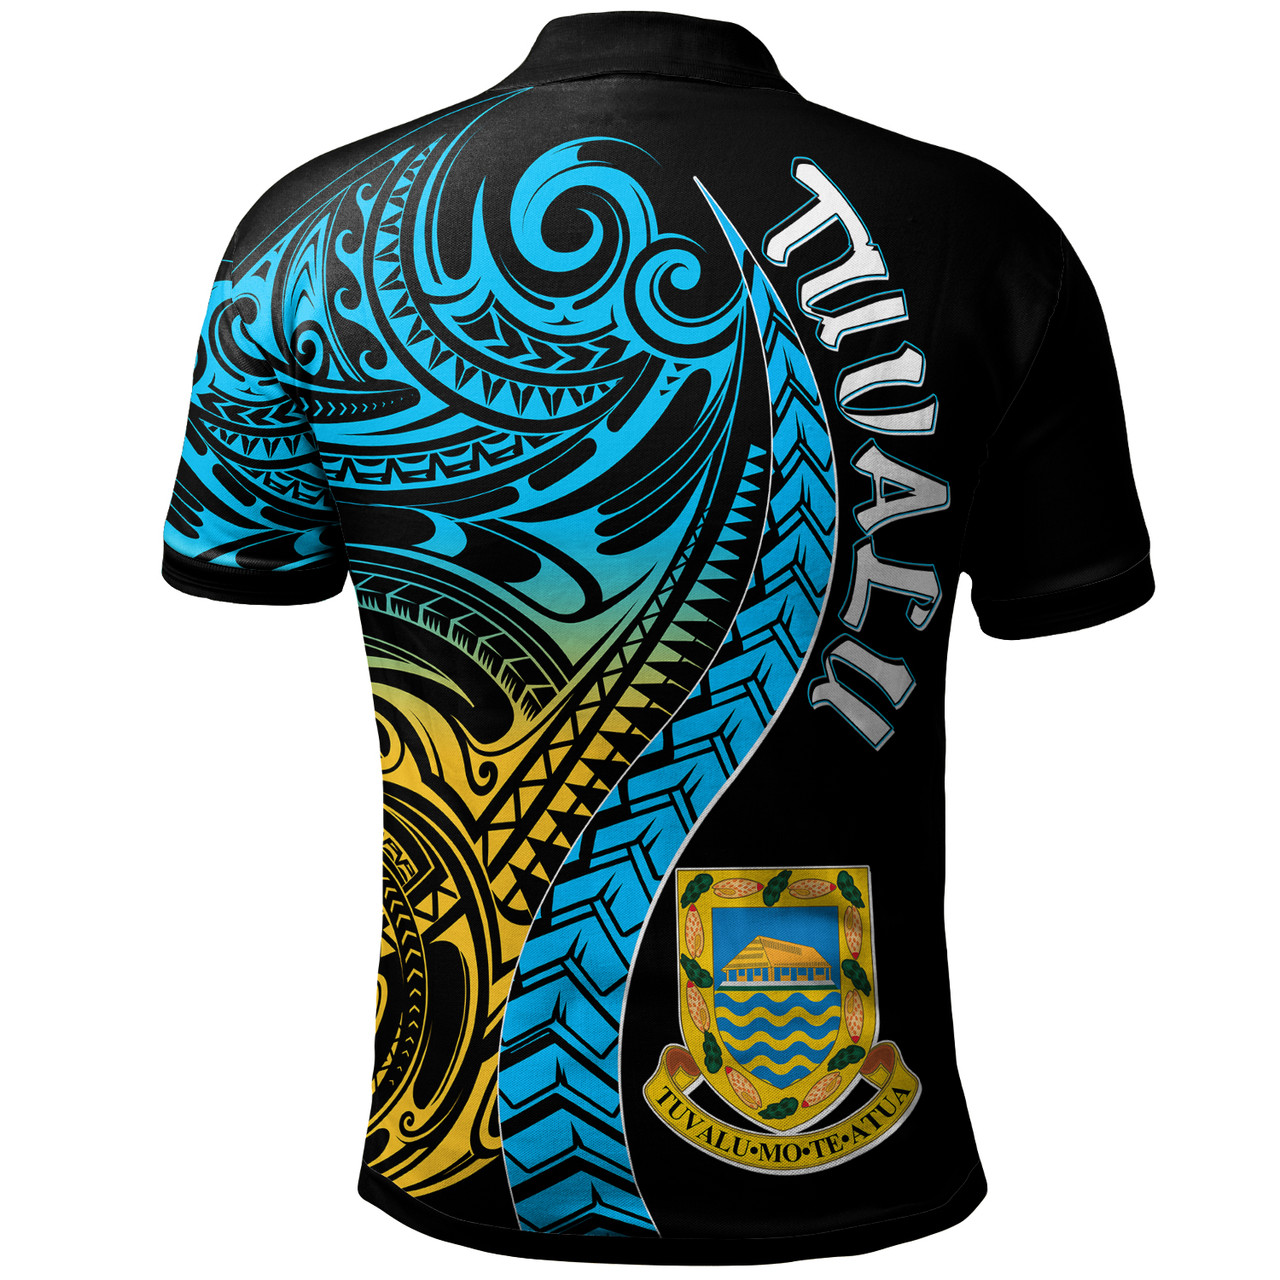 Tuvalu Polynesian Polo Shirt - Custom Tuvalu Day with Polynesian Pattern Polo Shirt